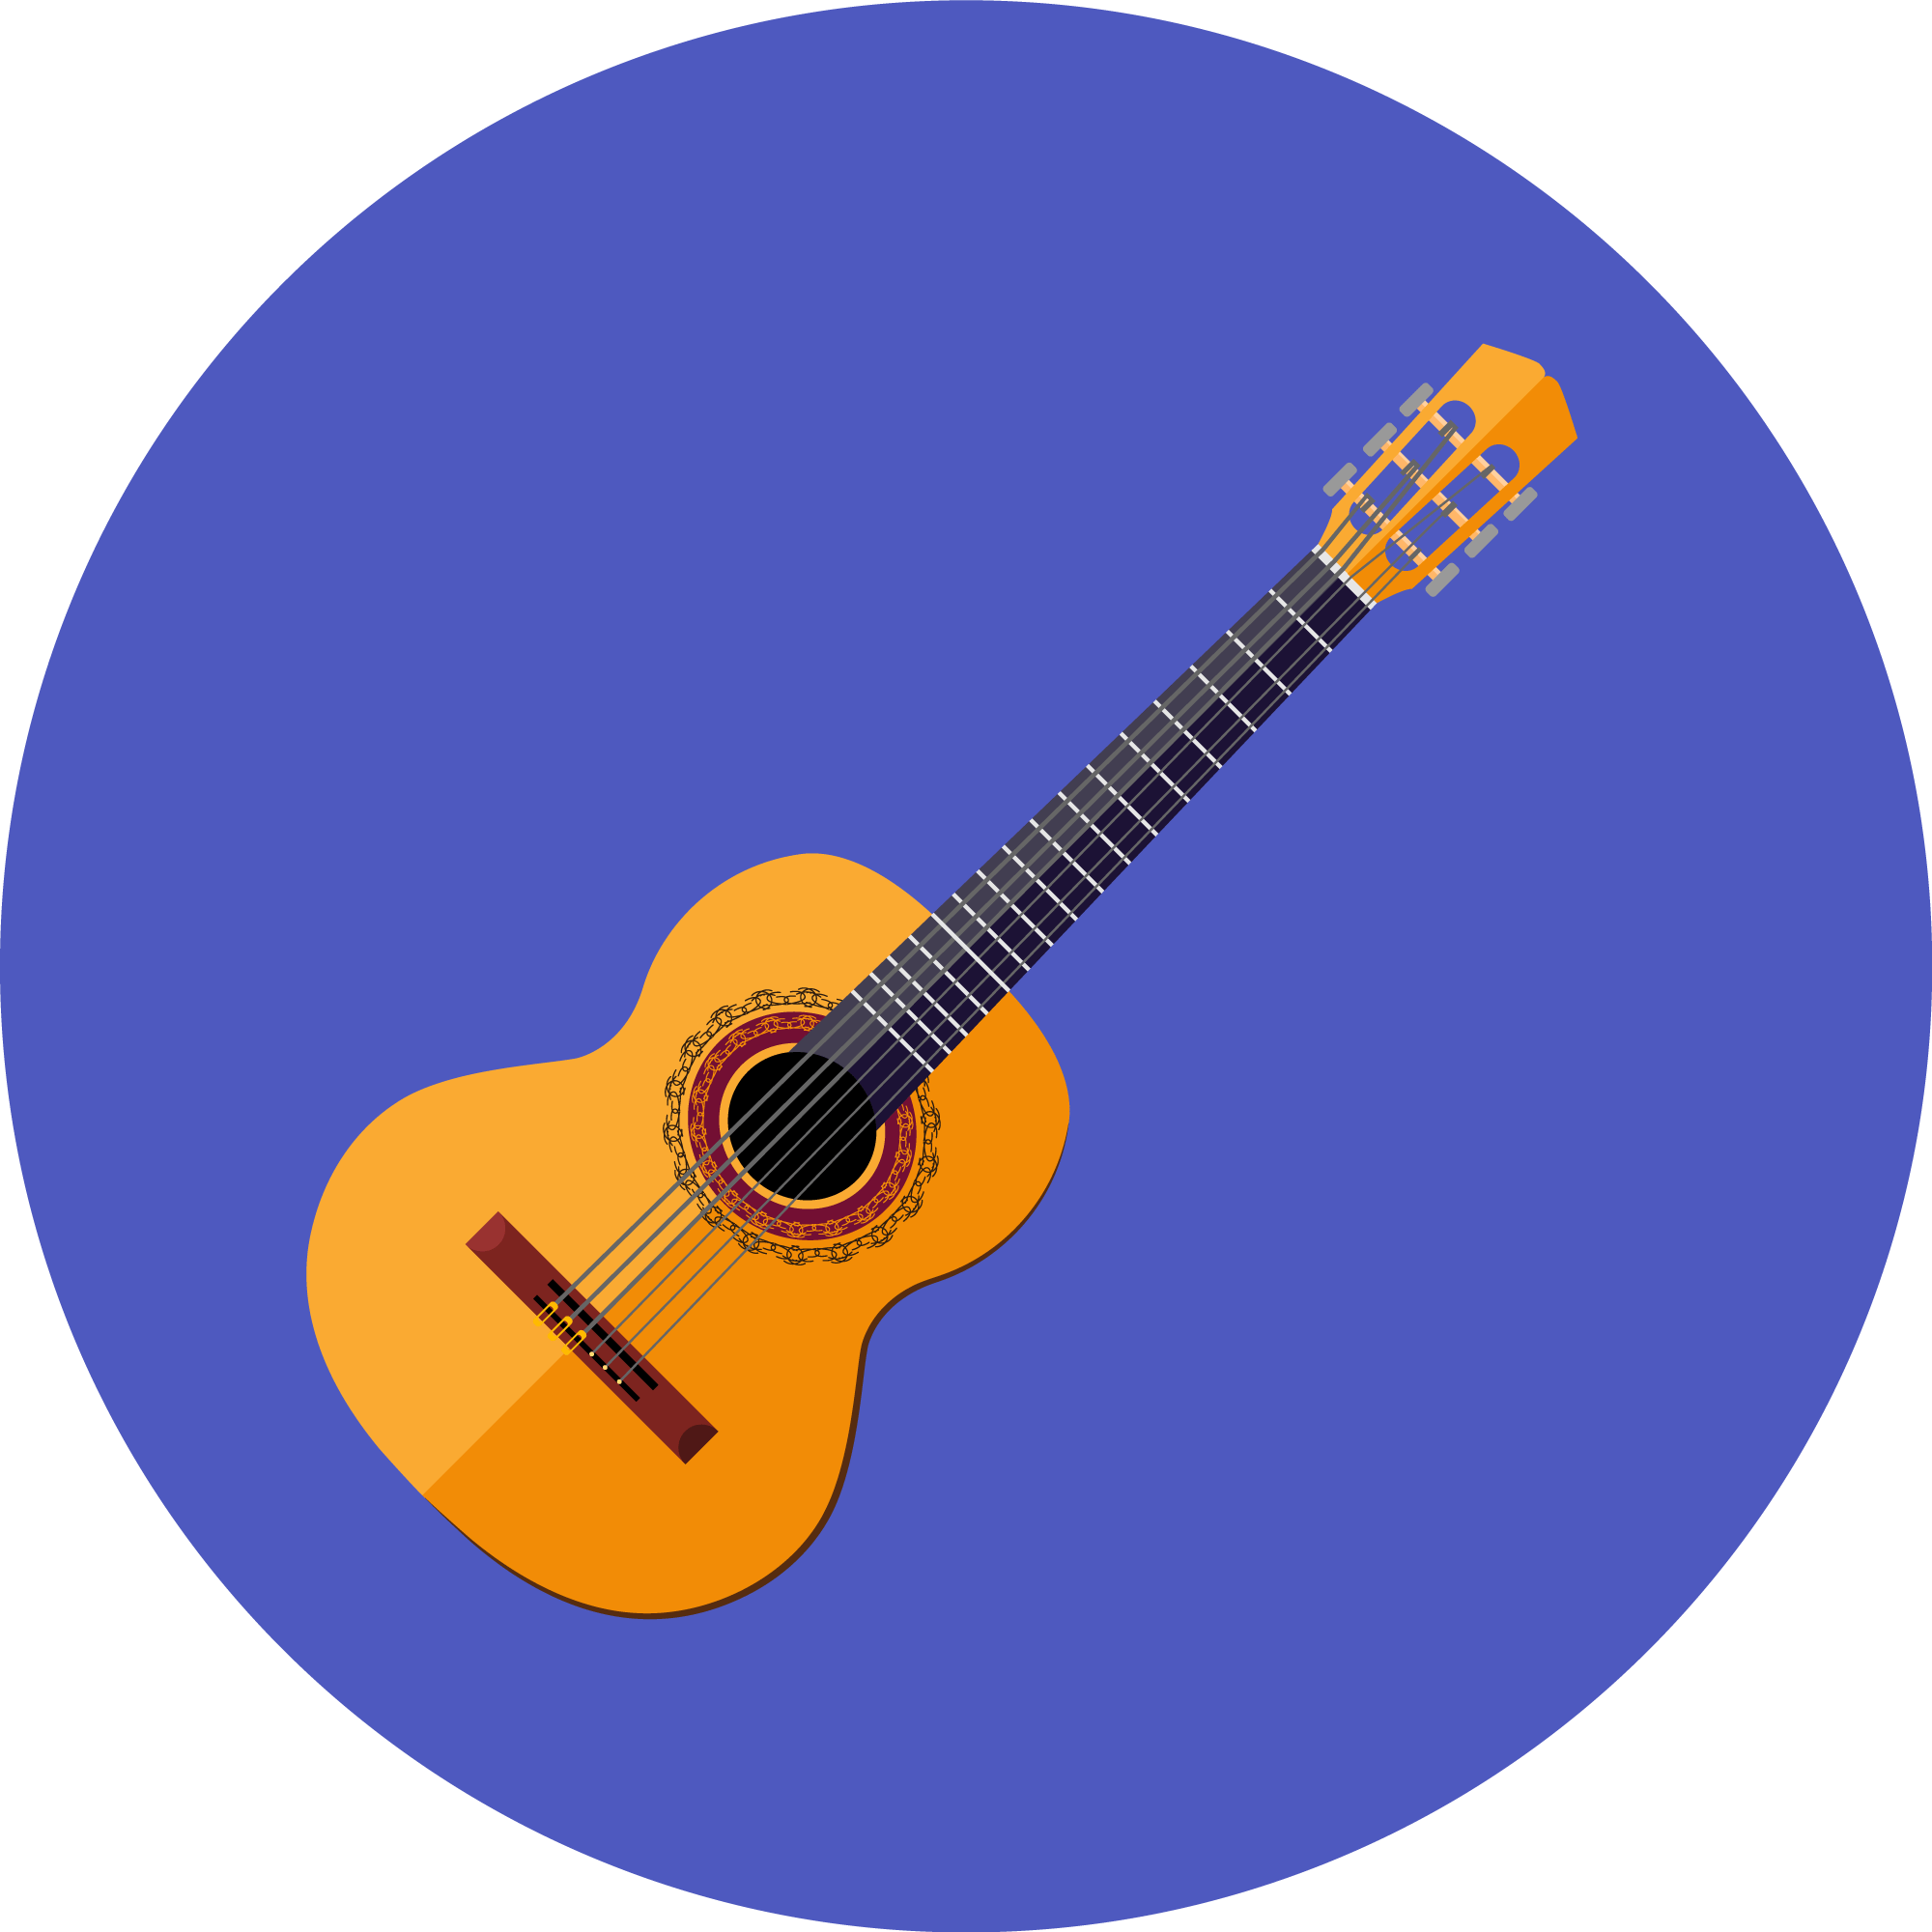 Classical guitar illustration